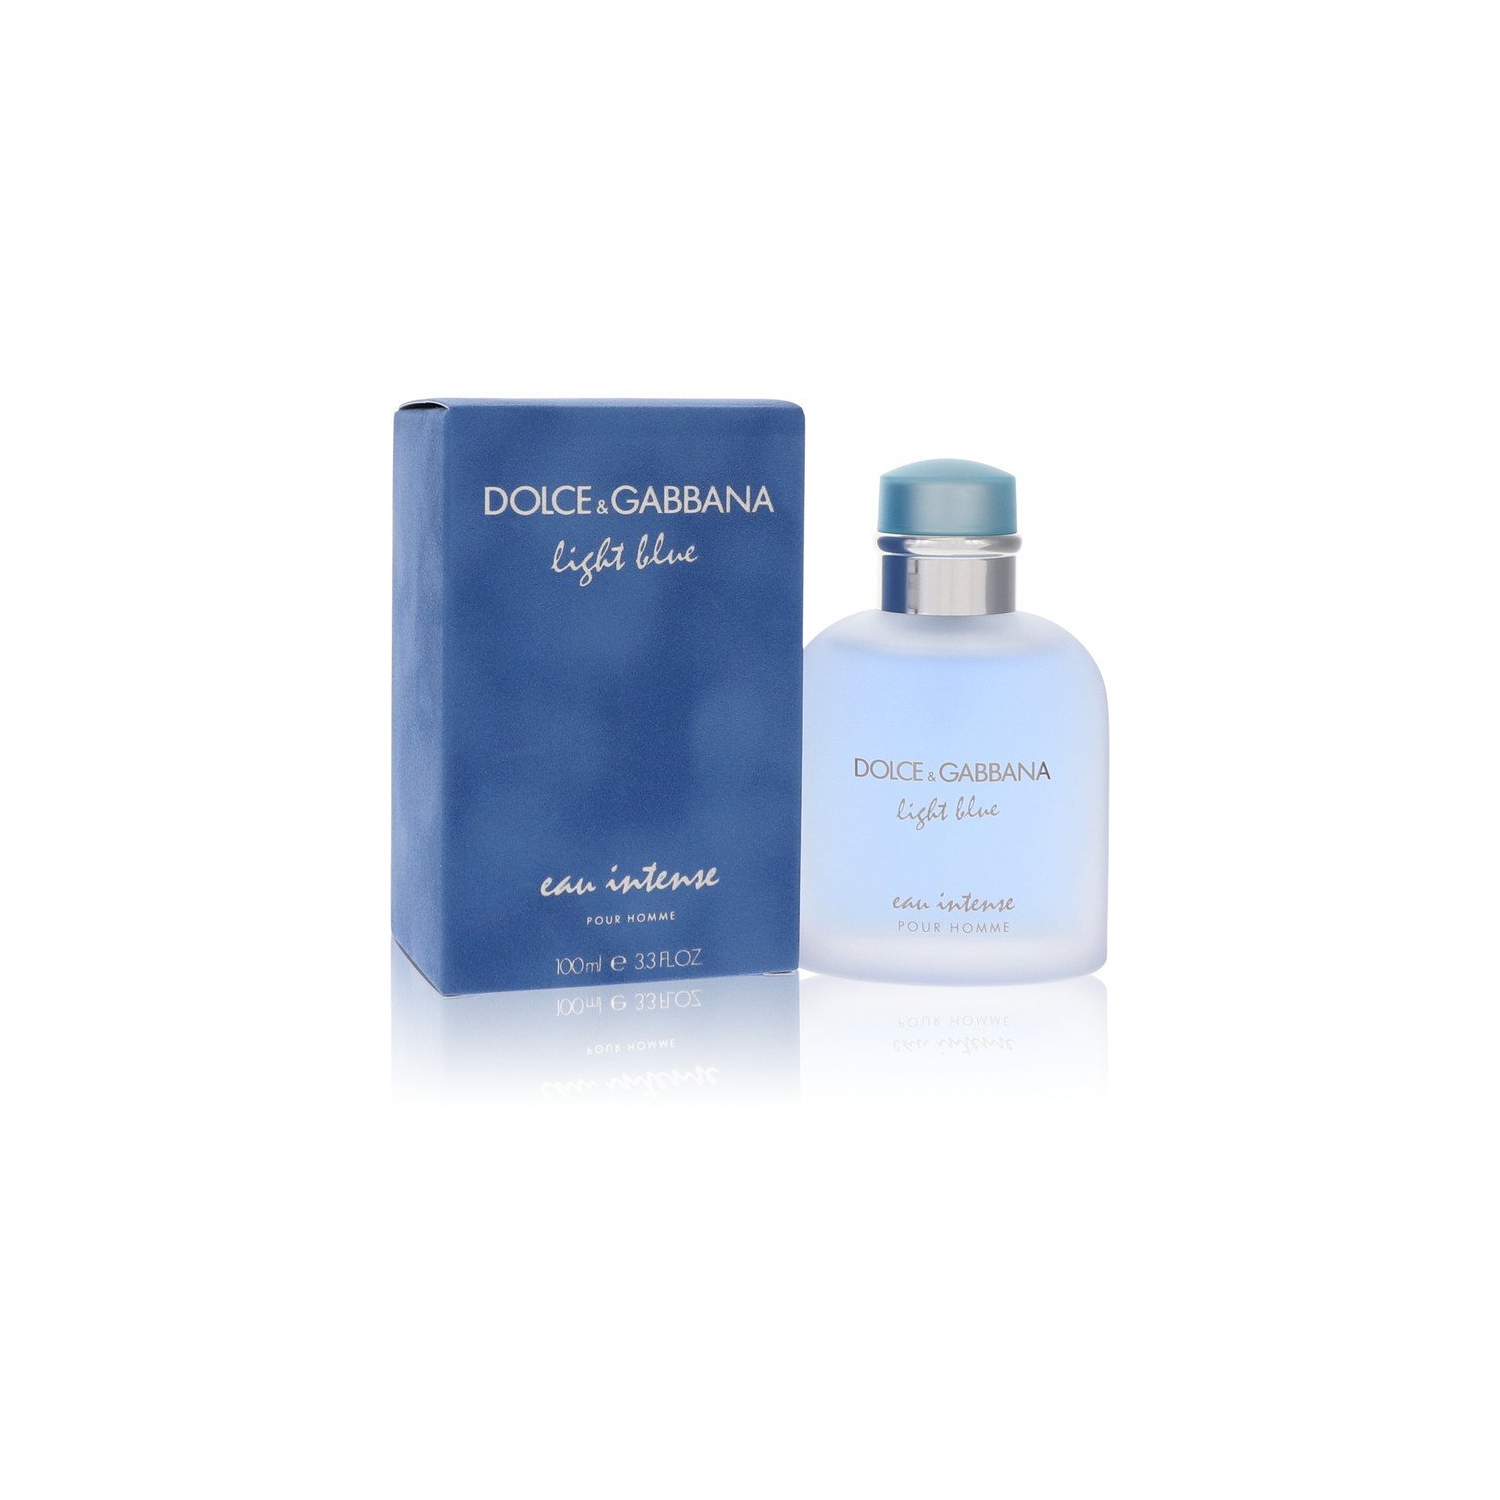 Dolce & Gabbana D&G Light Blue Eau Intense for Women 100ml EDP Authentic  Perfume